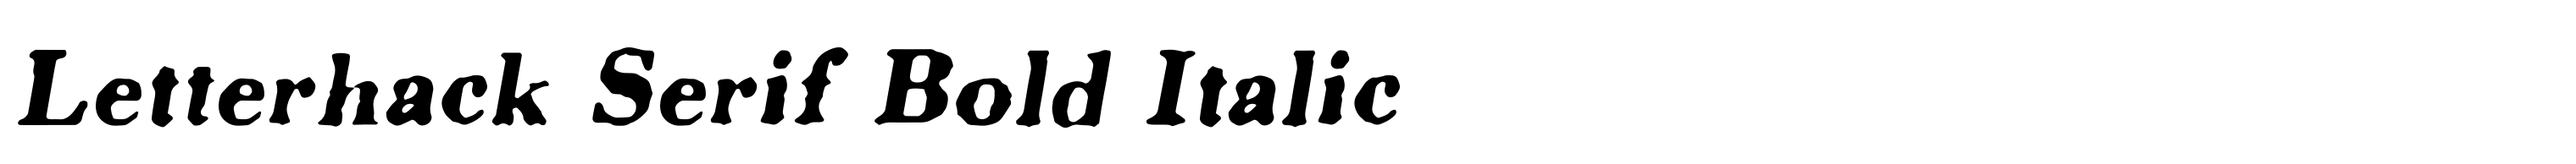 Letterhack Serif Bold Italic